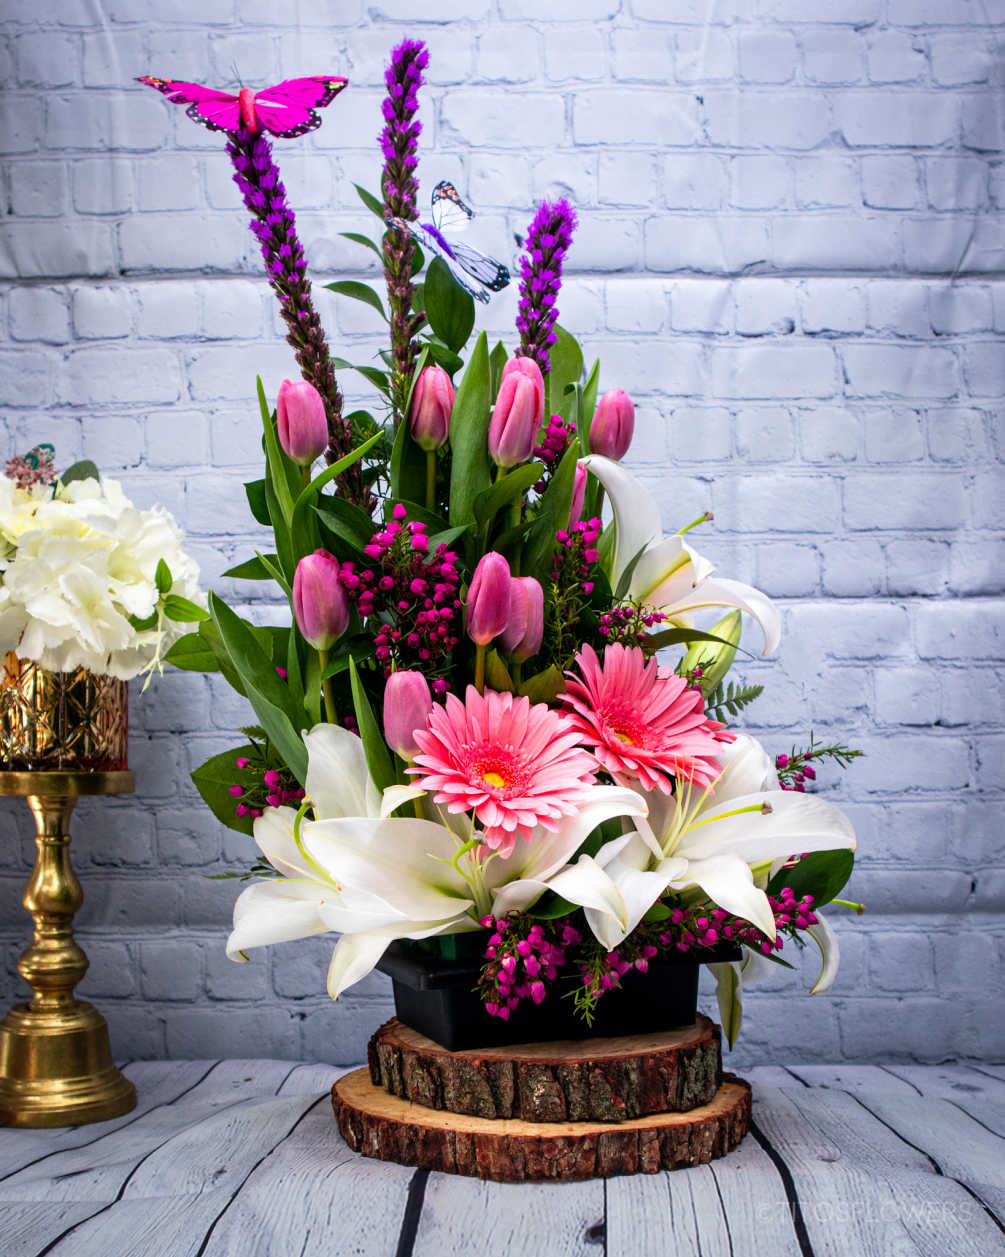 &quot;Our stunning arrangement features blush pink tulips, vibrant purple liatris, delicate pink